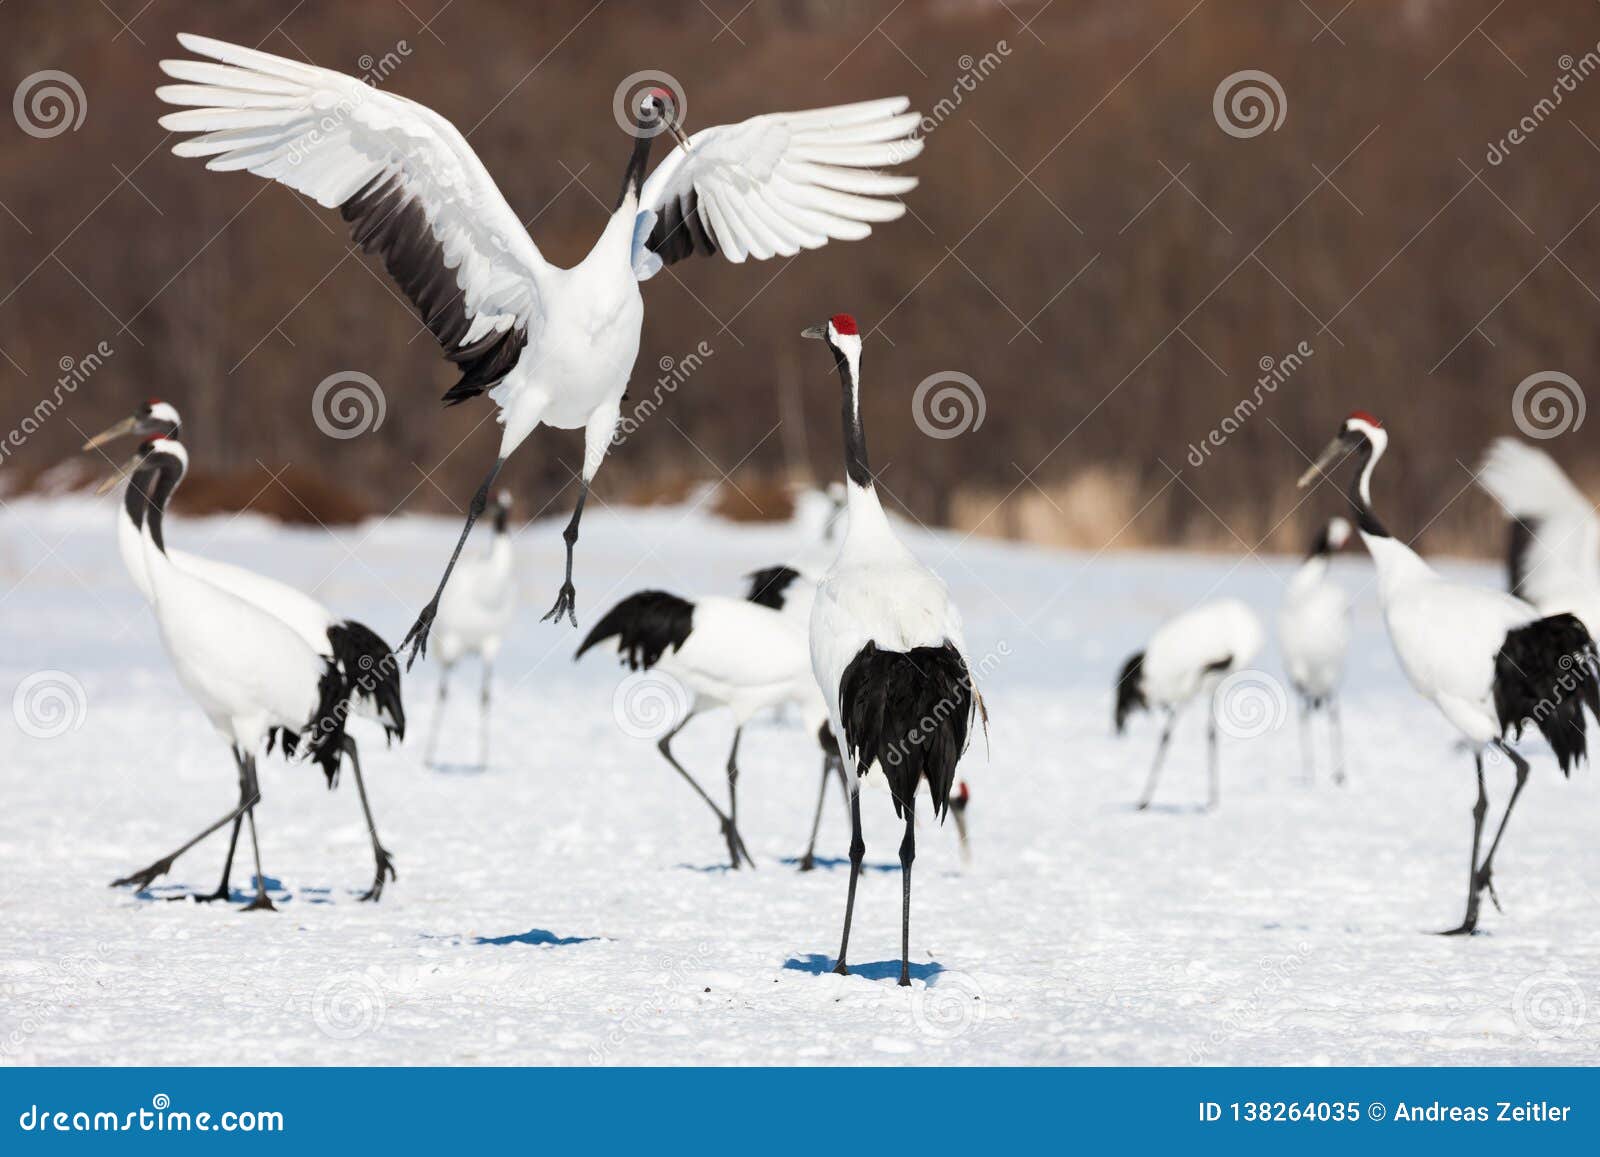 red-crowned crane bird dancing on snow and flying in kushiro, hokkaido island, japan in winter season